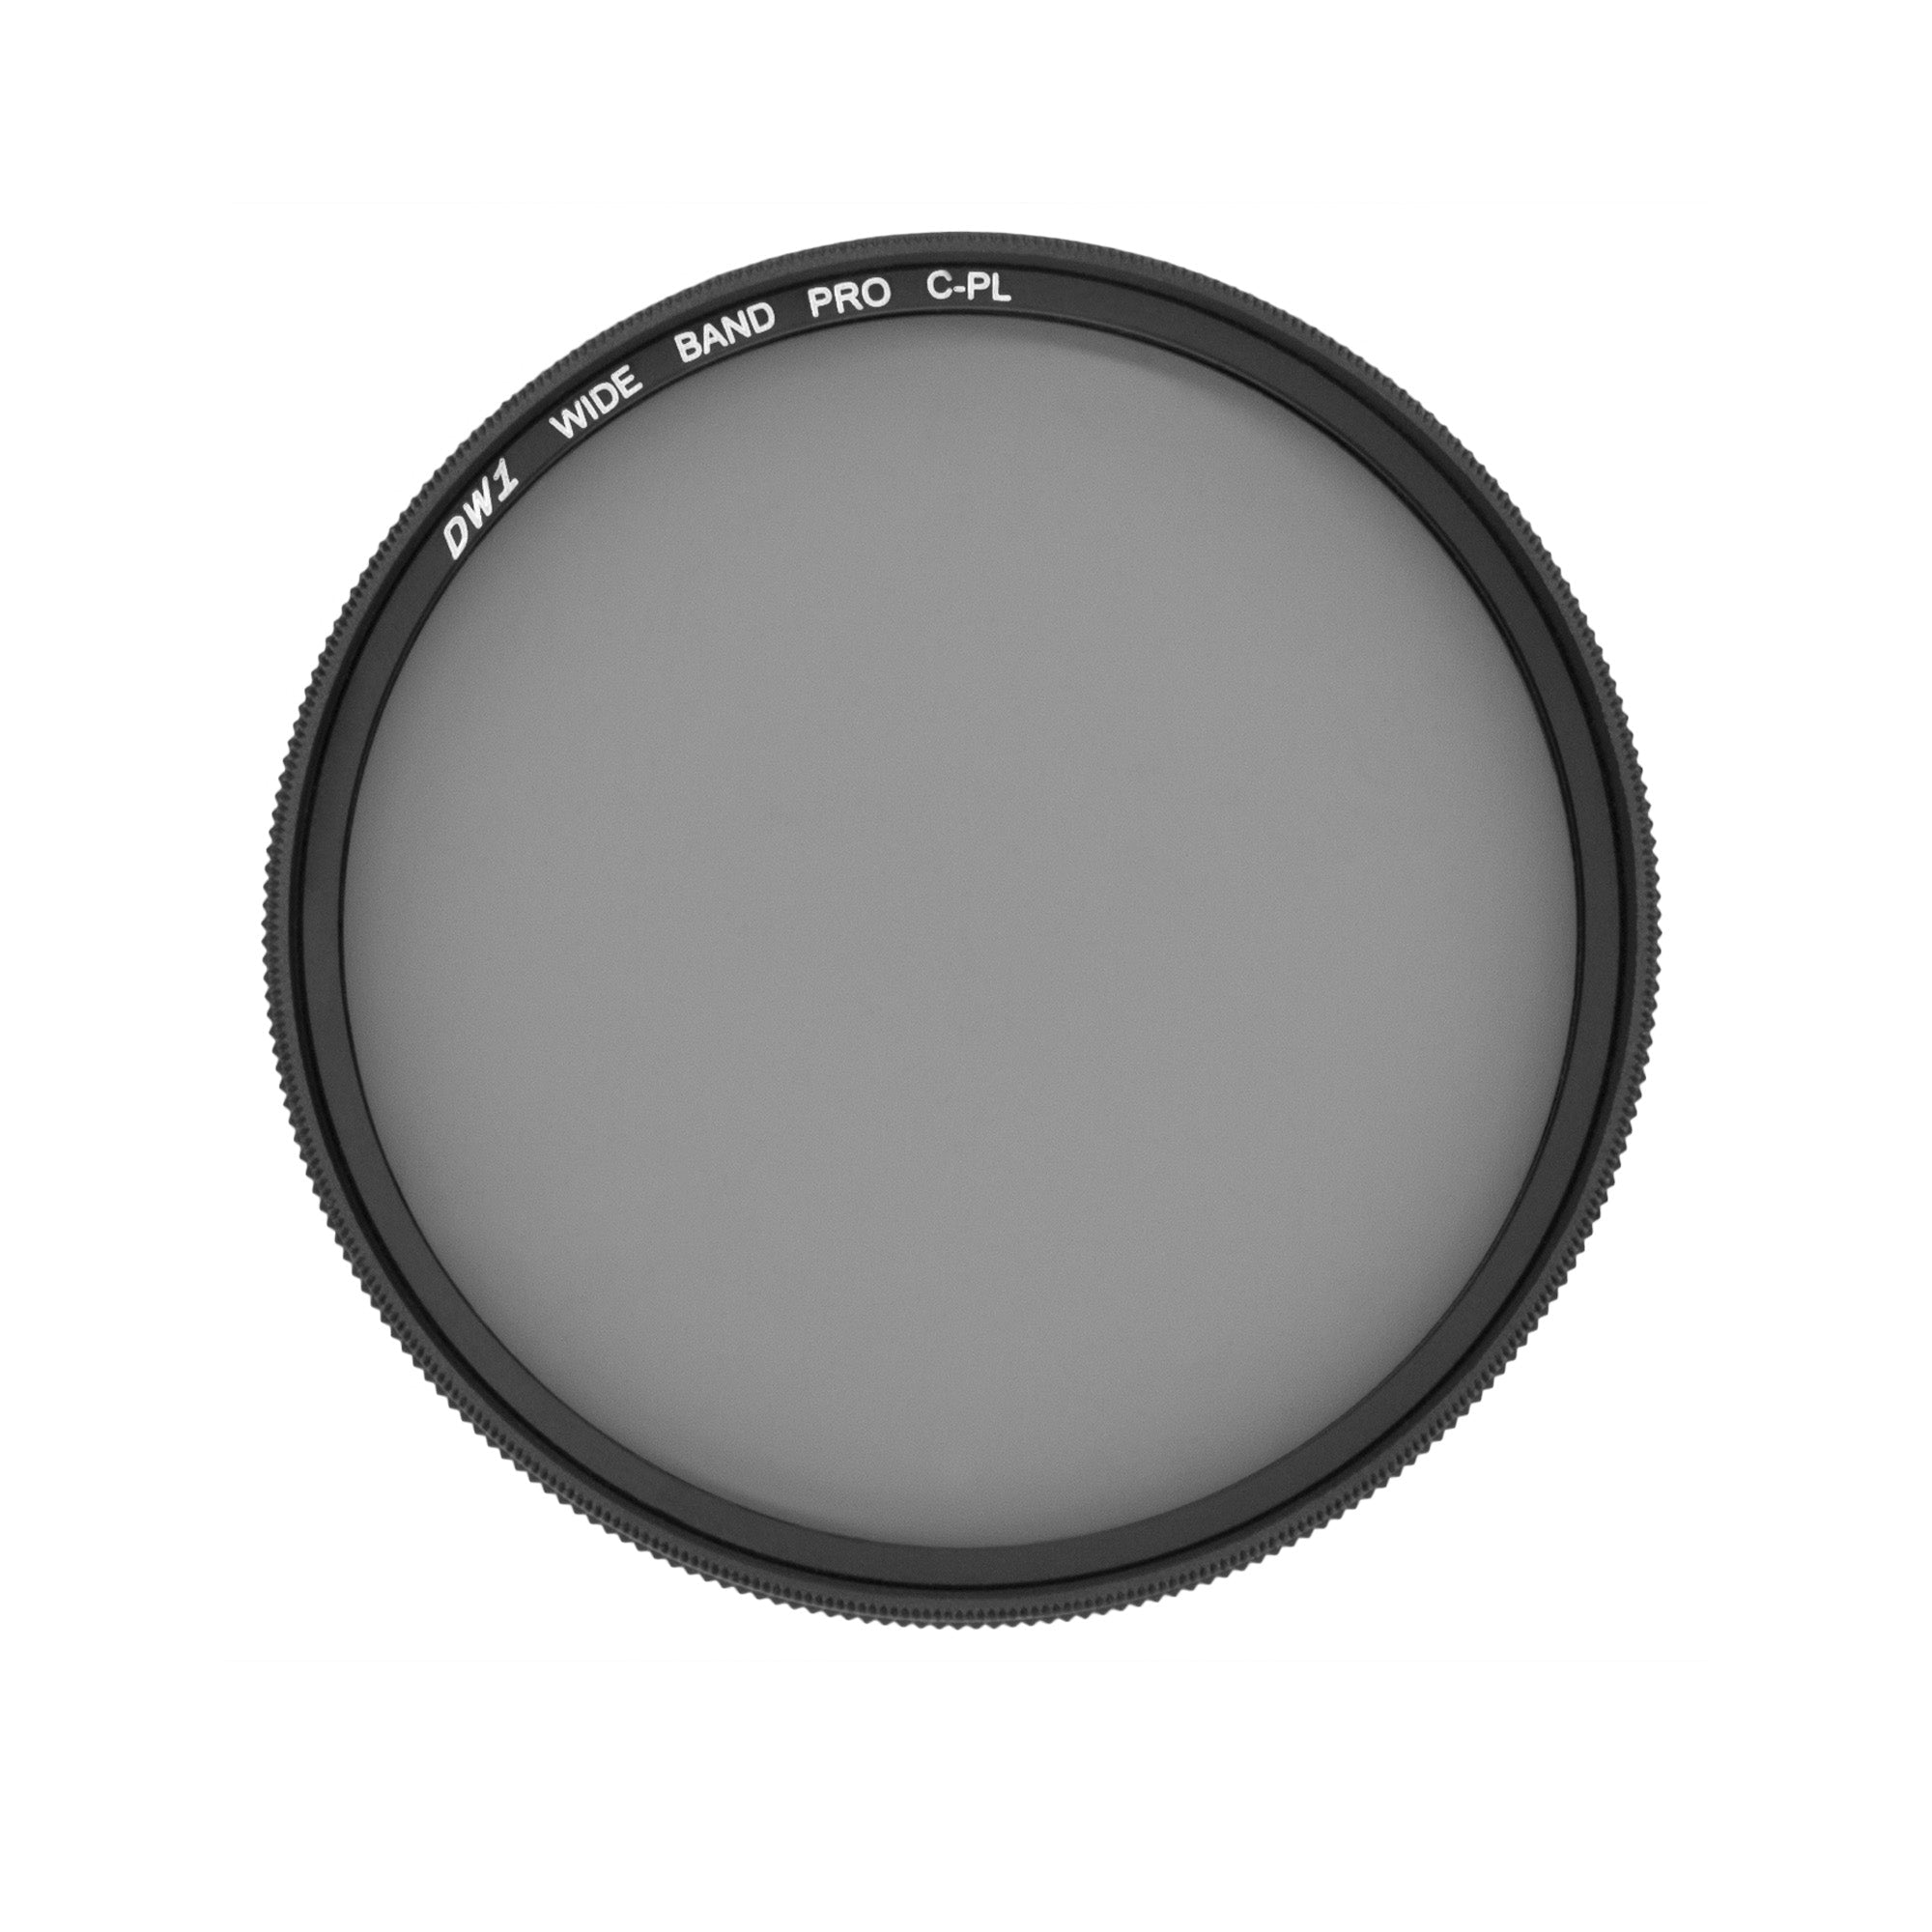 Filtru de polarizare circulara (CPL) DW1 Pro Zomei de 86mm, Wide Band